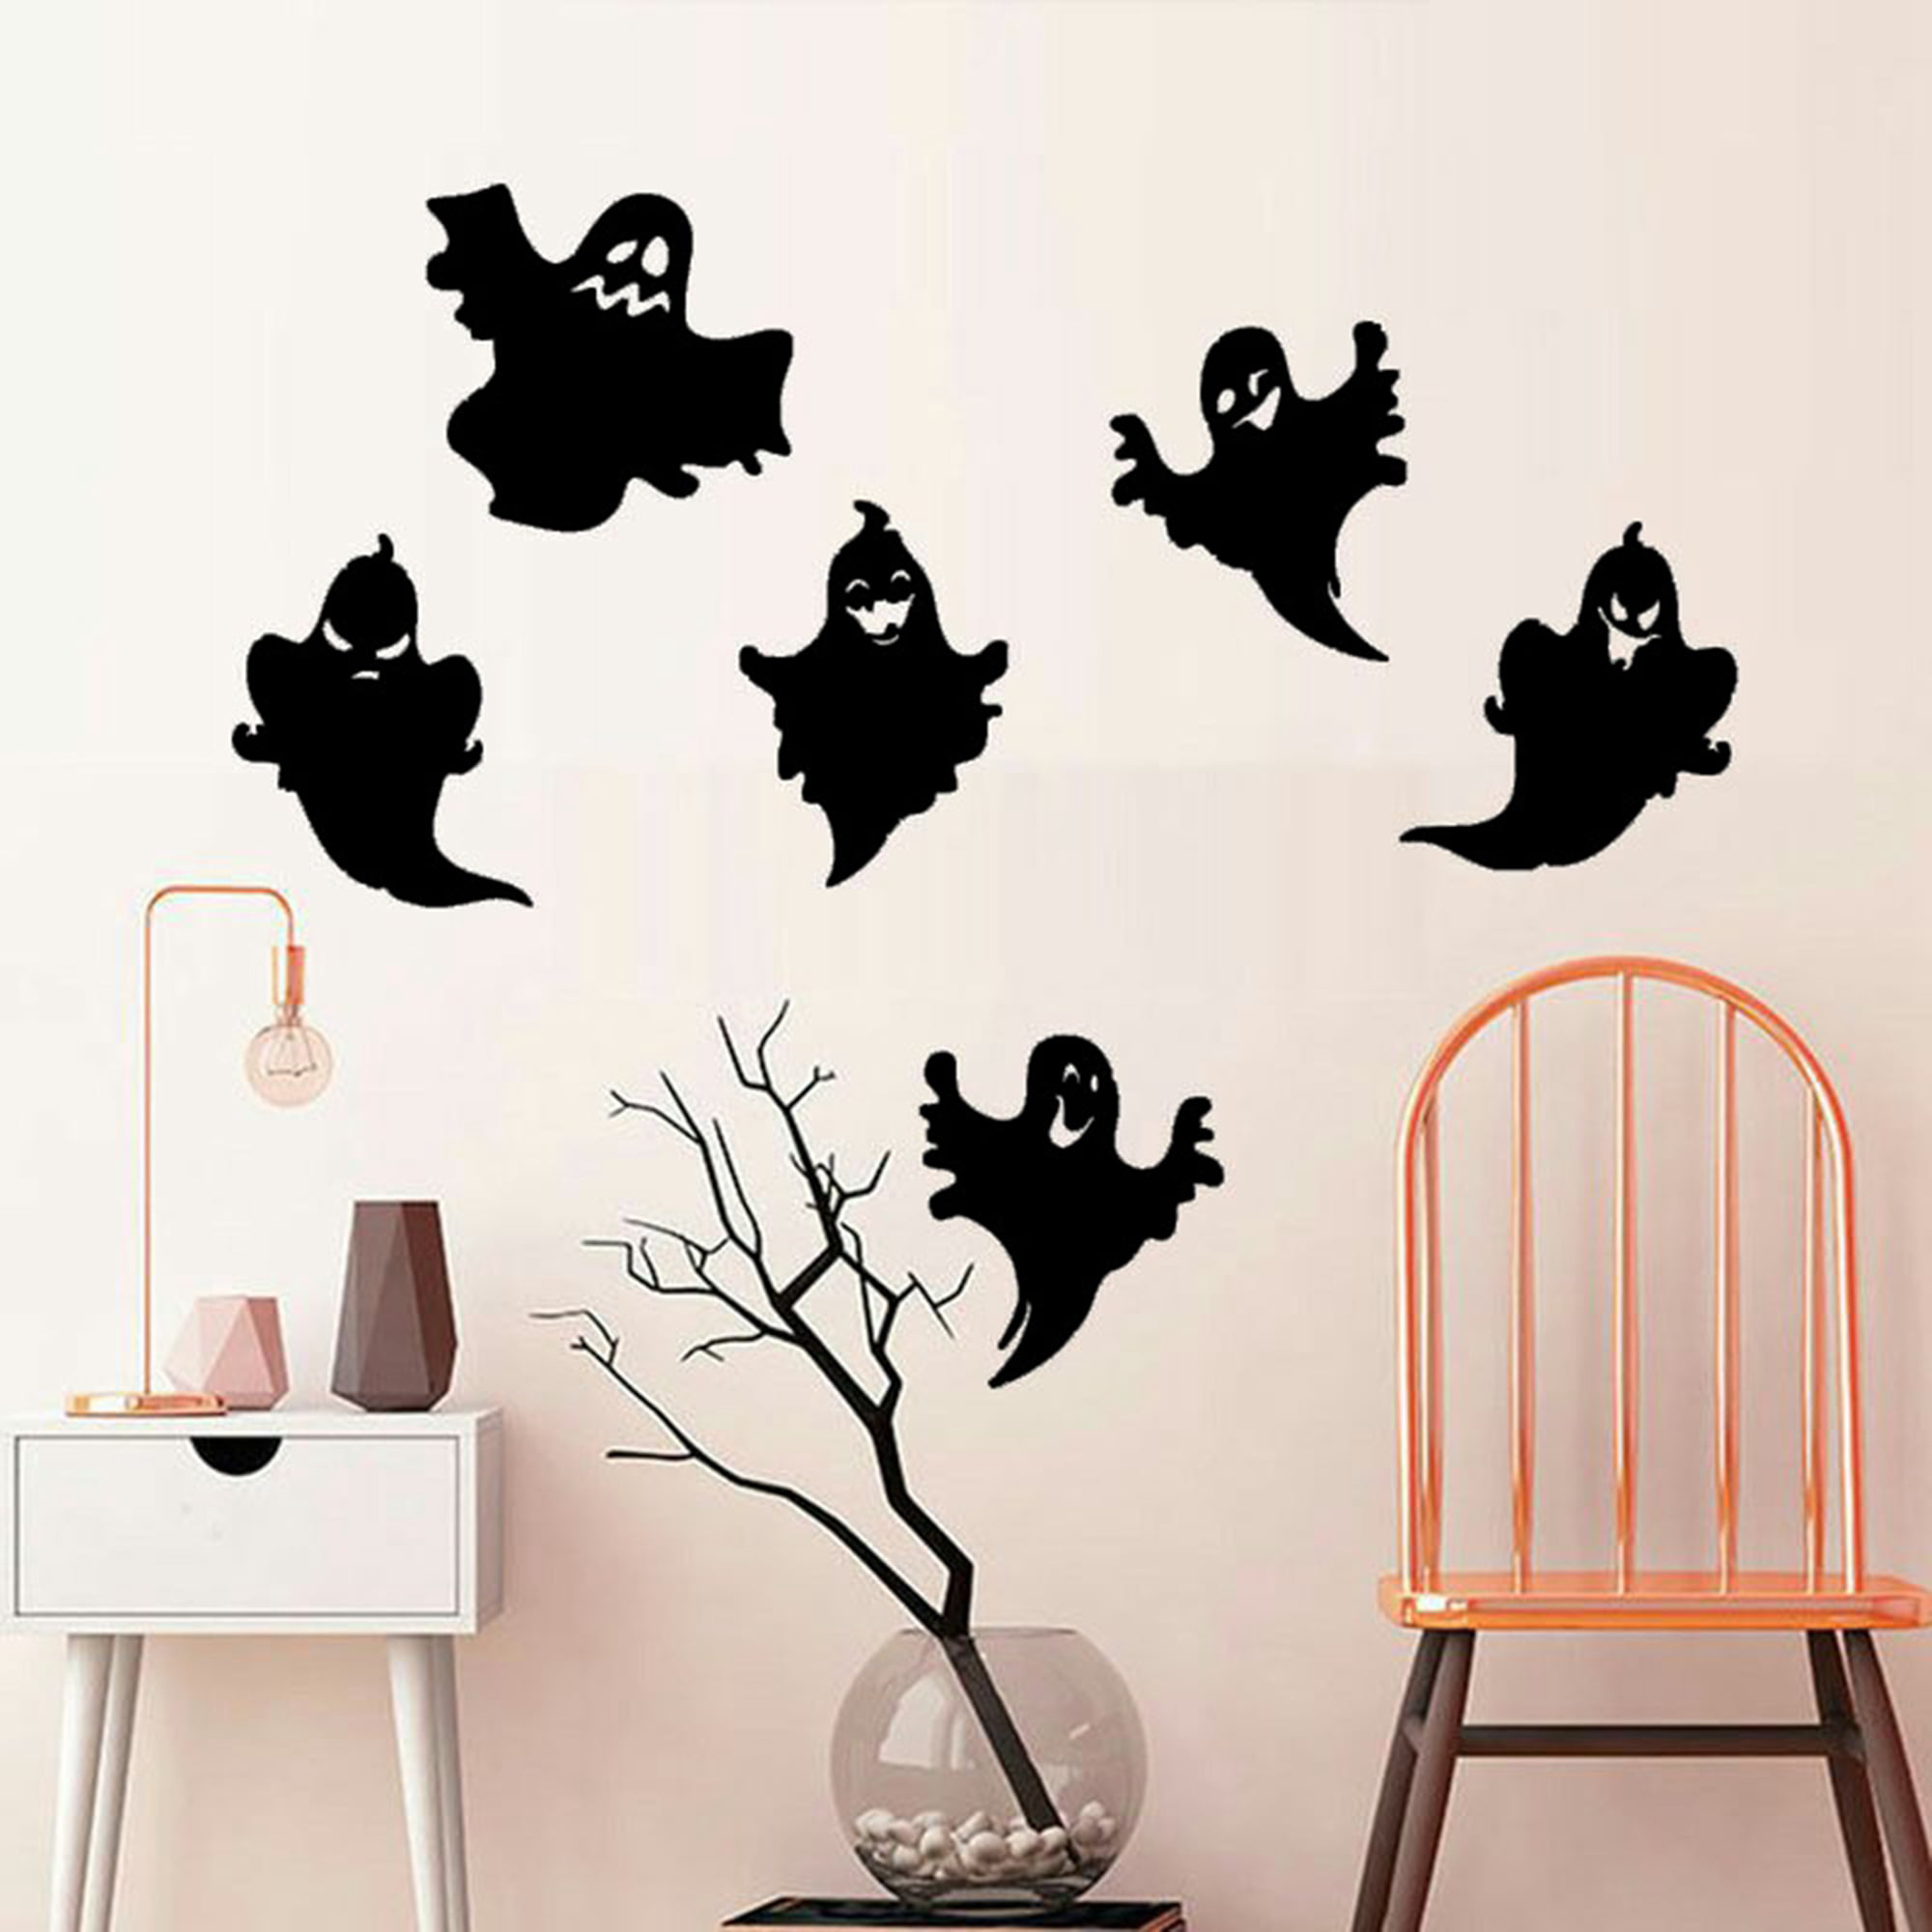  Halloween Ghoul Wall Decal - Creepy Human Monster